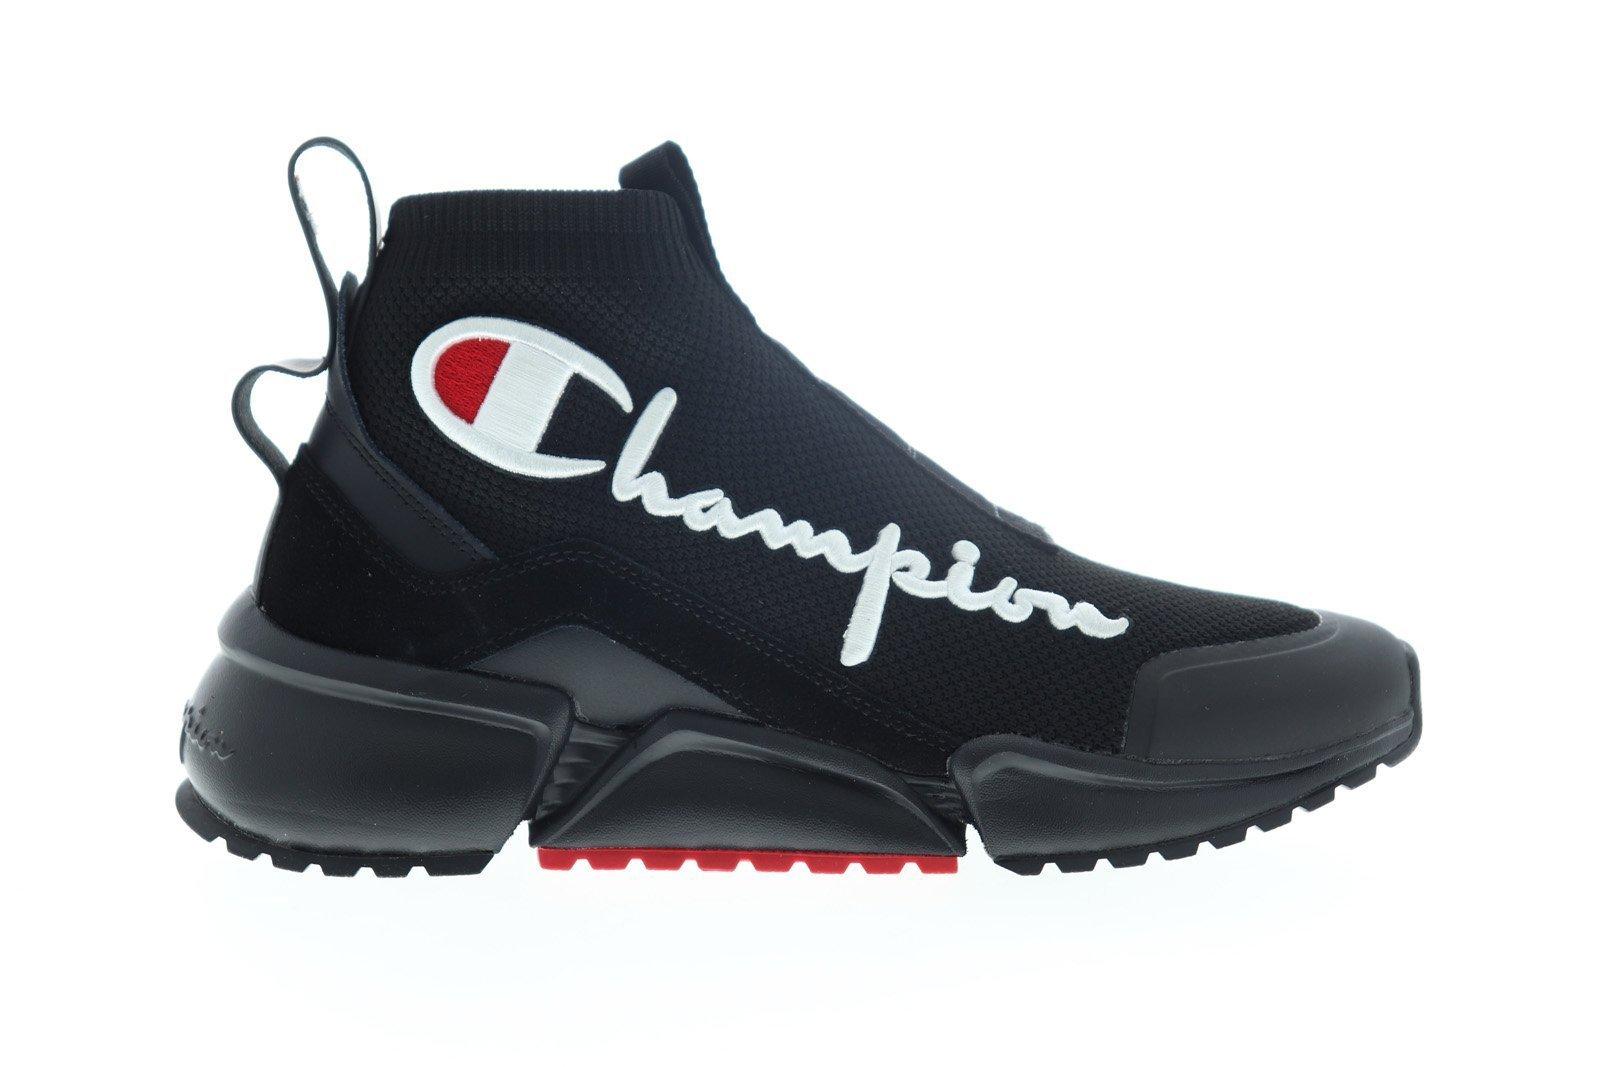 black champion slippers